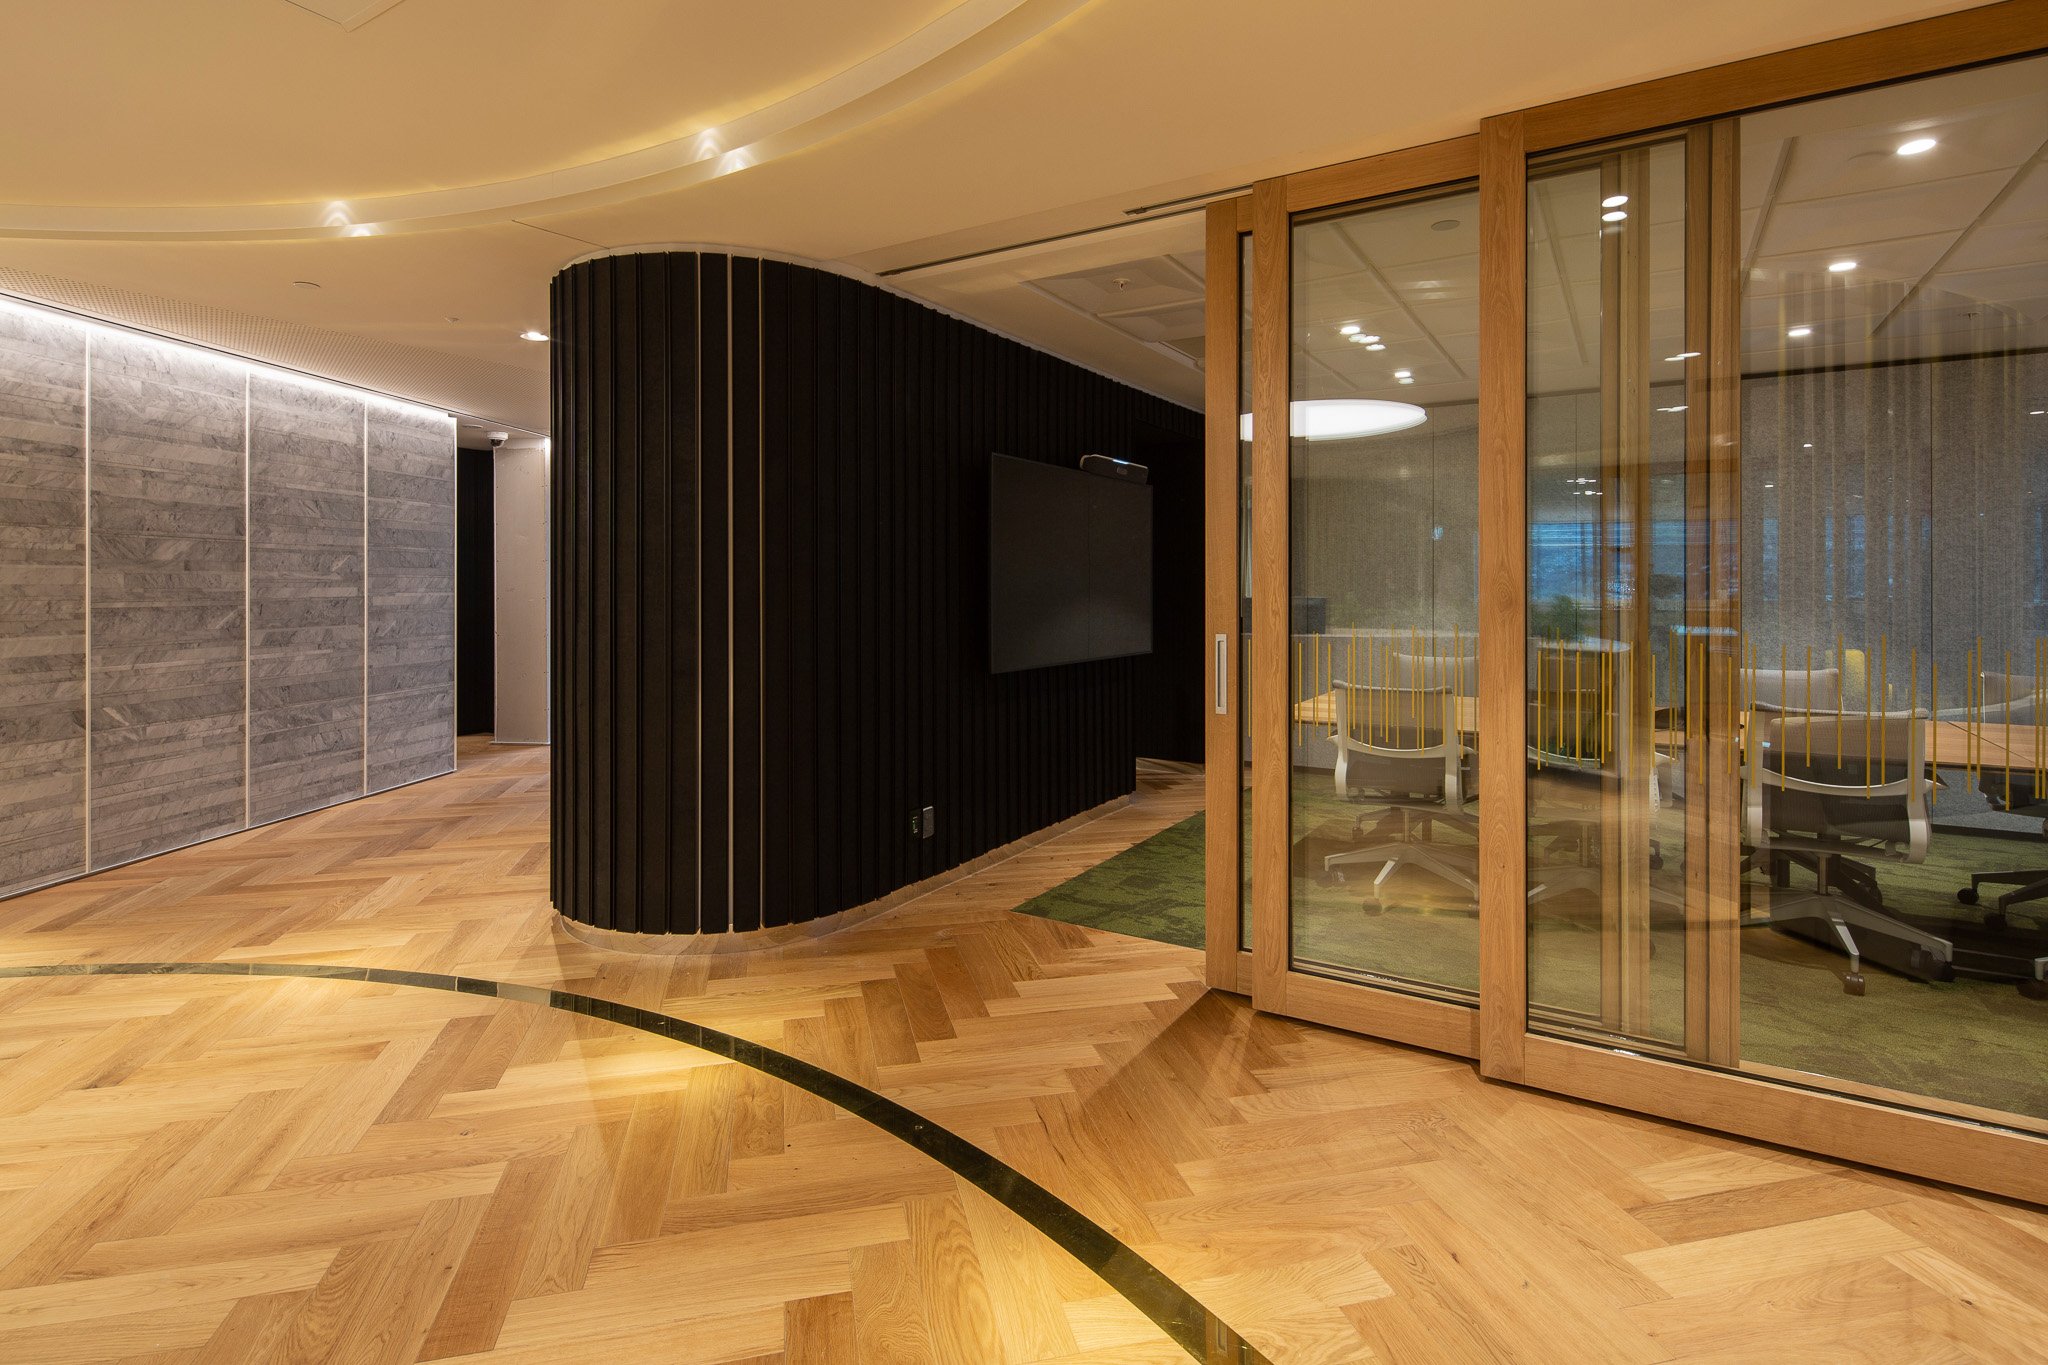 Deloitte with wooden flooring